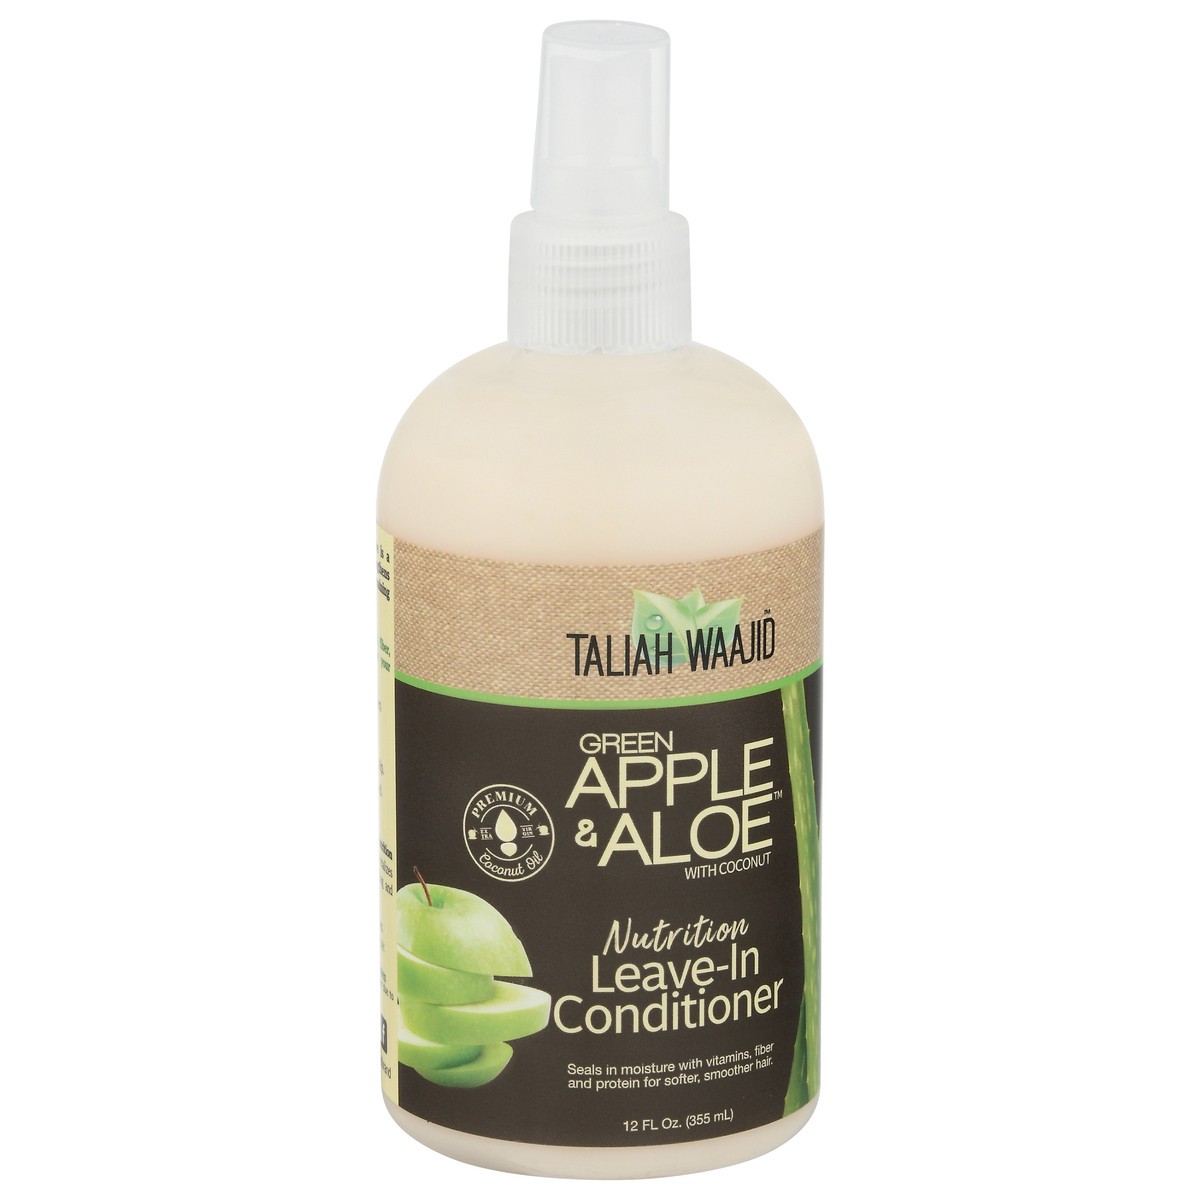 slide 9 of 9, Taliah Waajid Green Apple & Aloe with Coconut Nutrition Leave-In Conditioner 12 fl oz, 12 fl oz